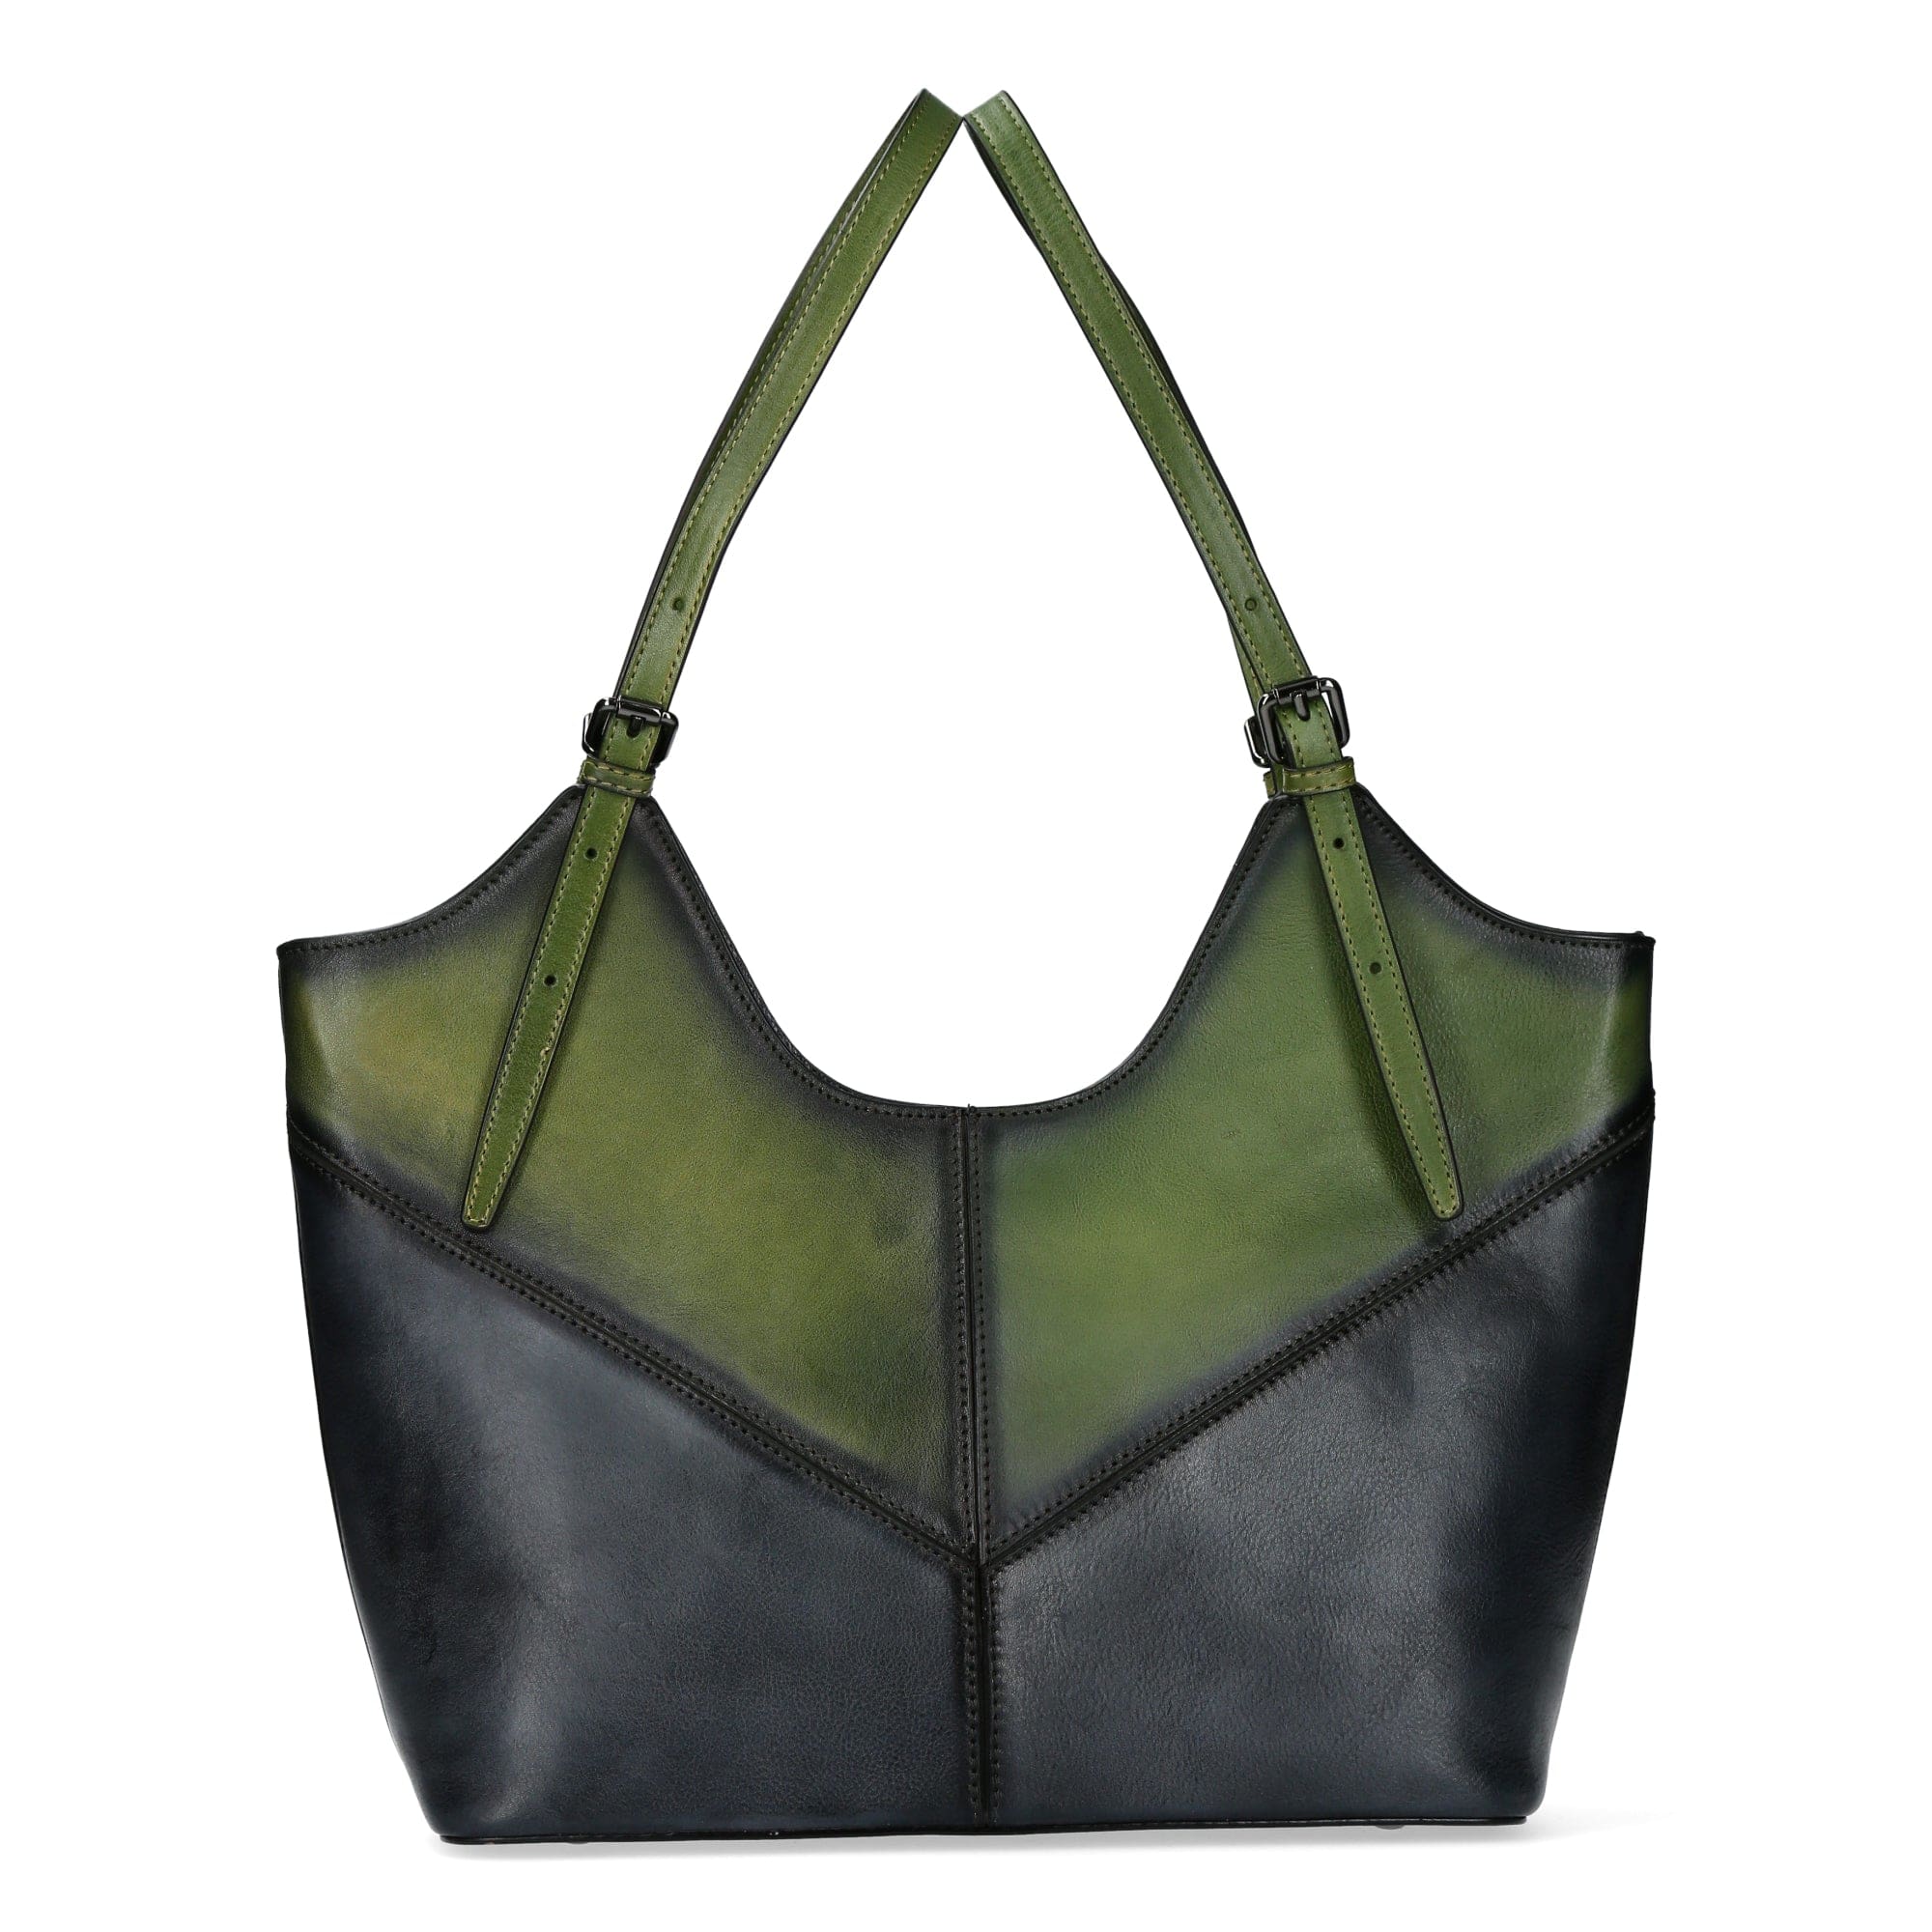 Alisier leather bag - Green - Bag